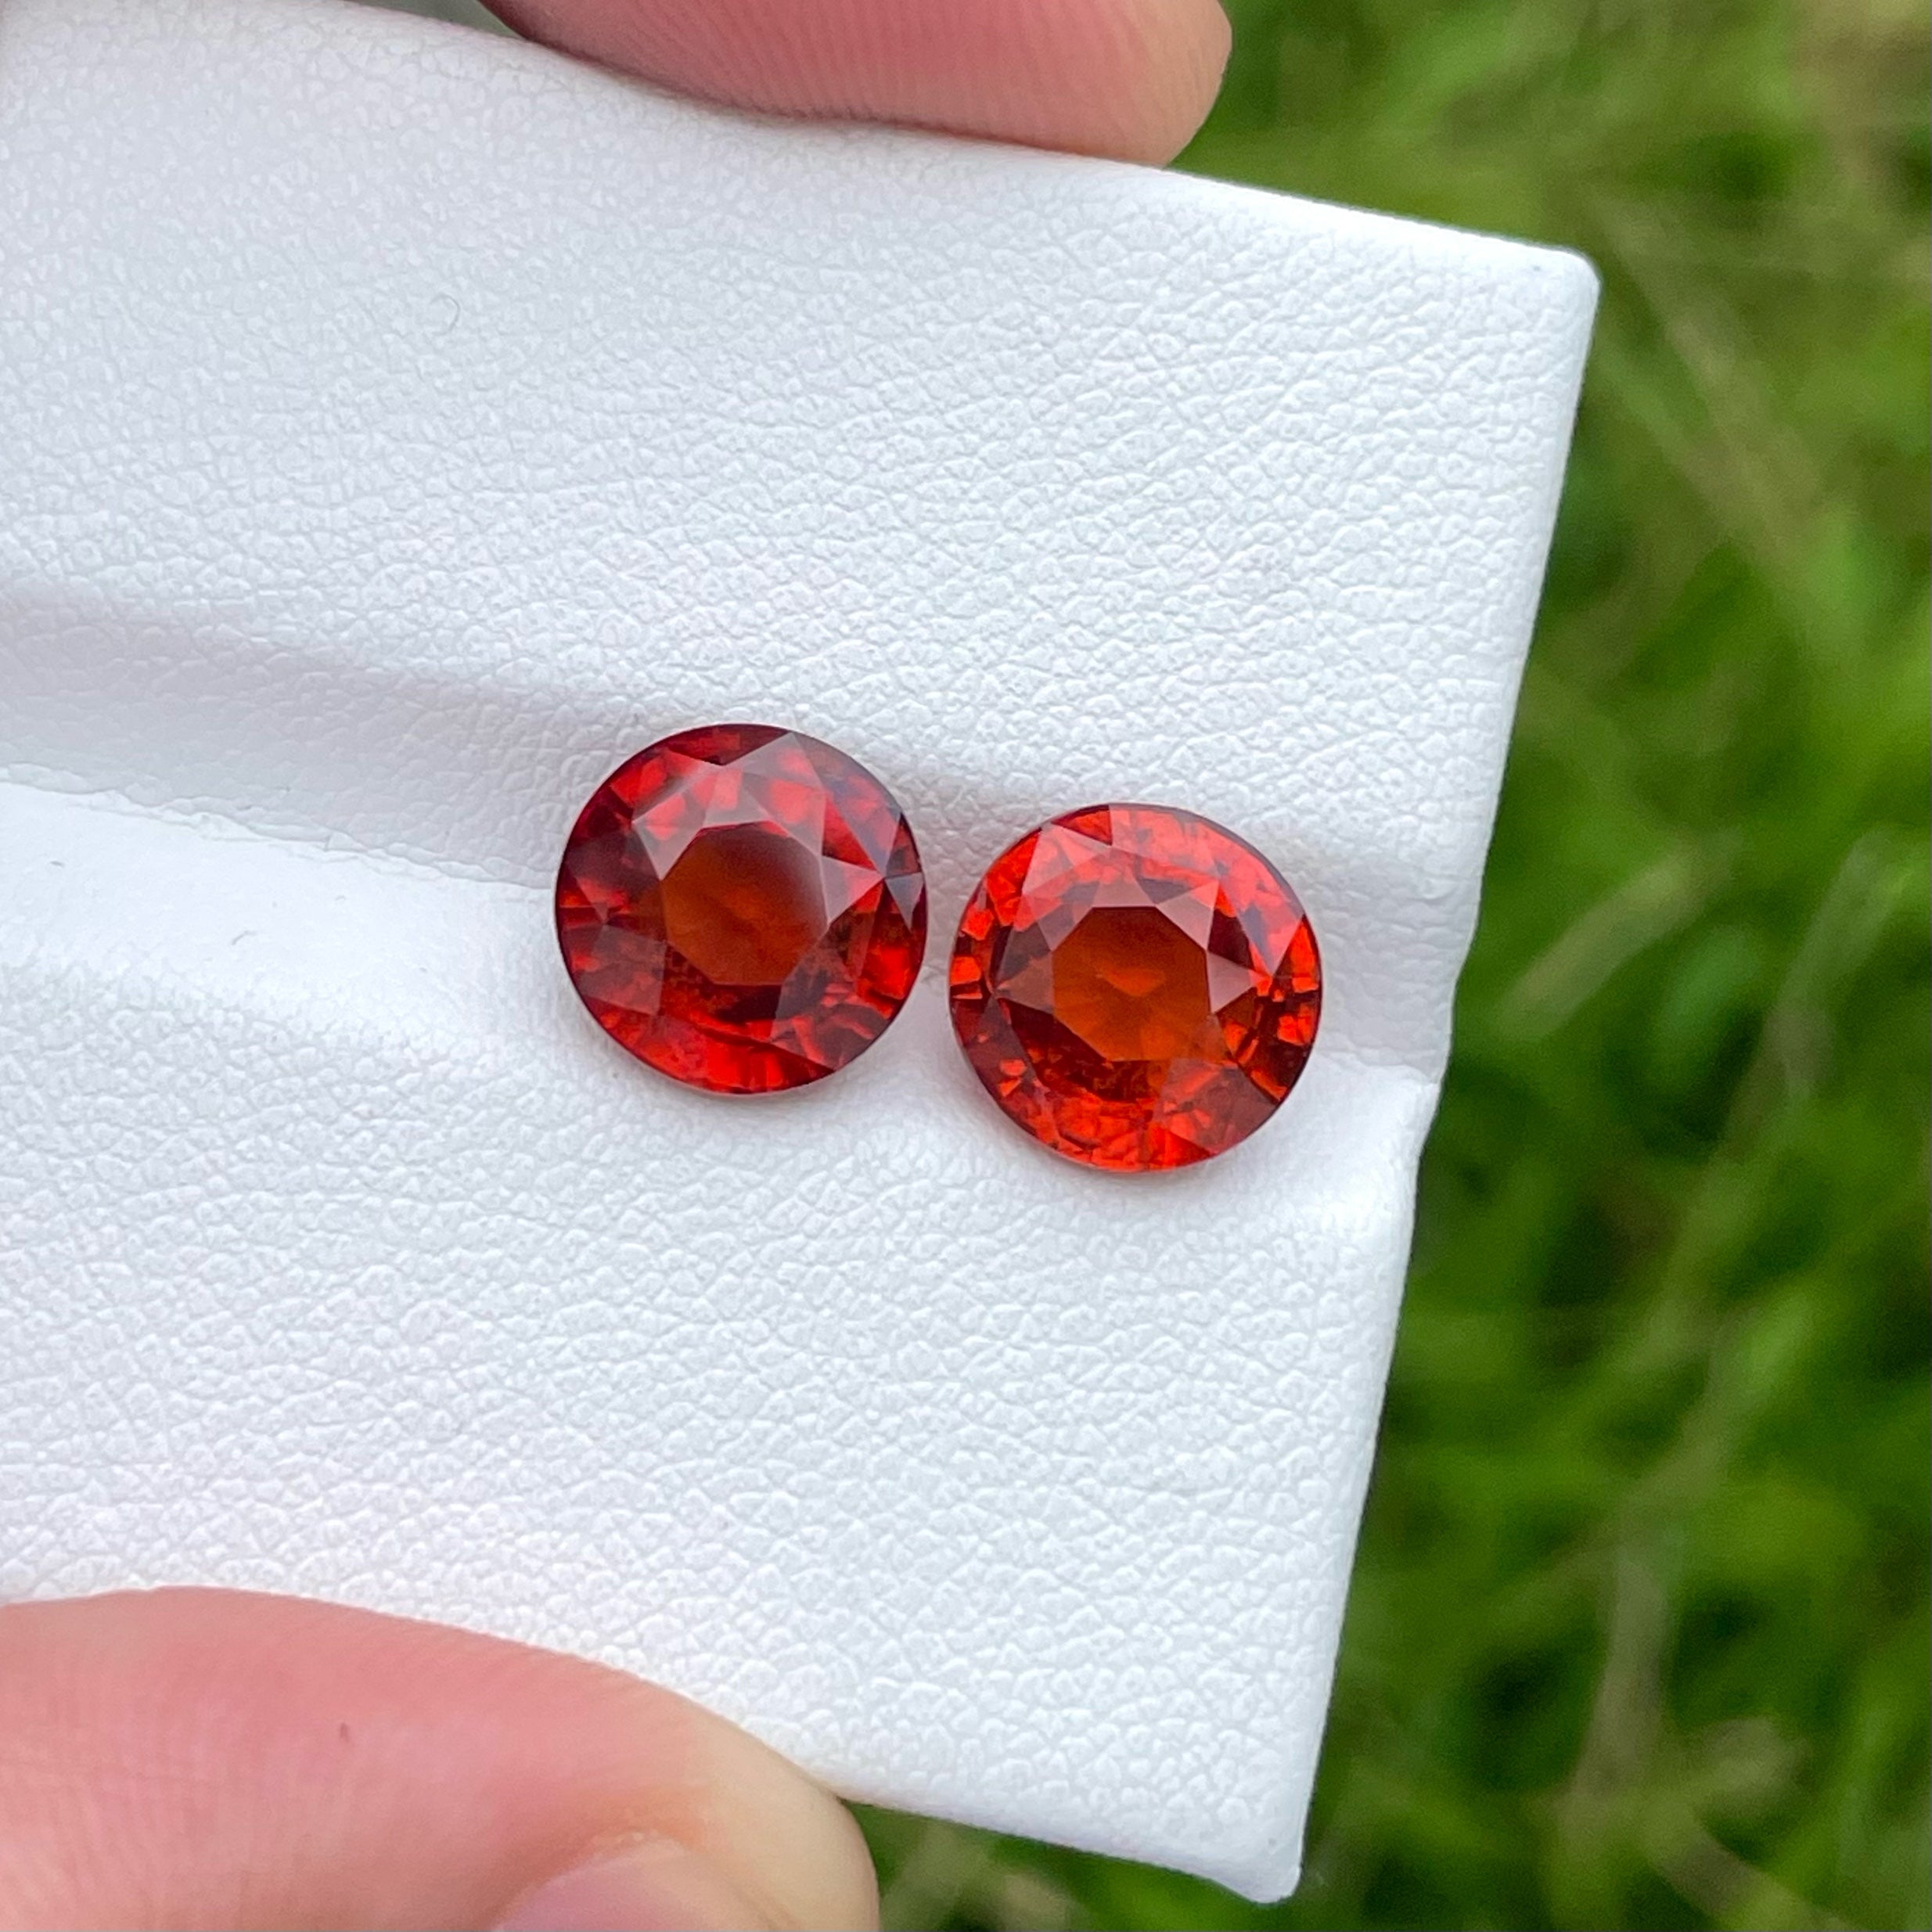 Vivid Bright Red Garnet Pair 8.10 carats Round Brilliant Cut Natural Gemstone from Madagascar